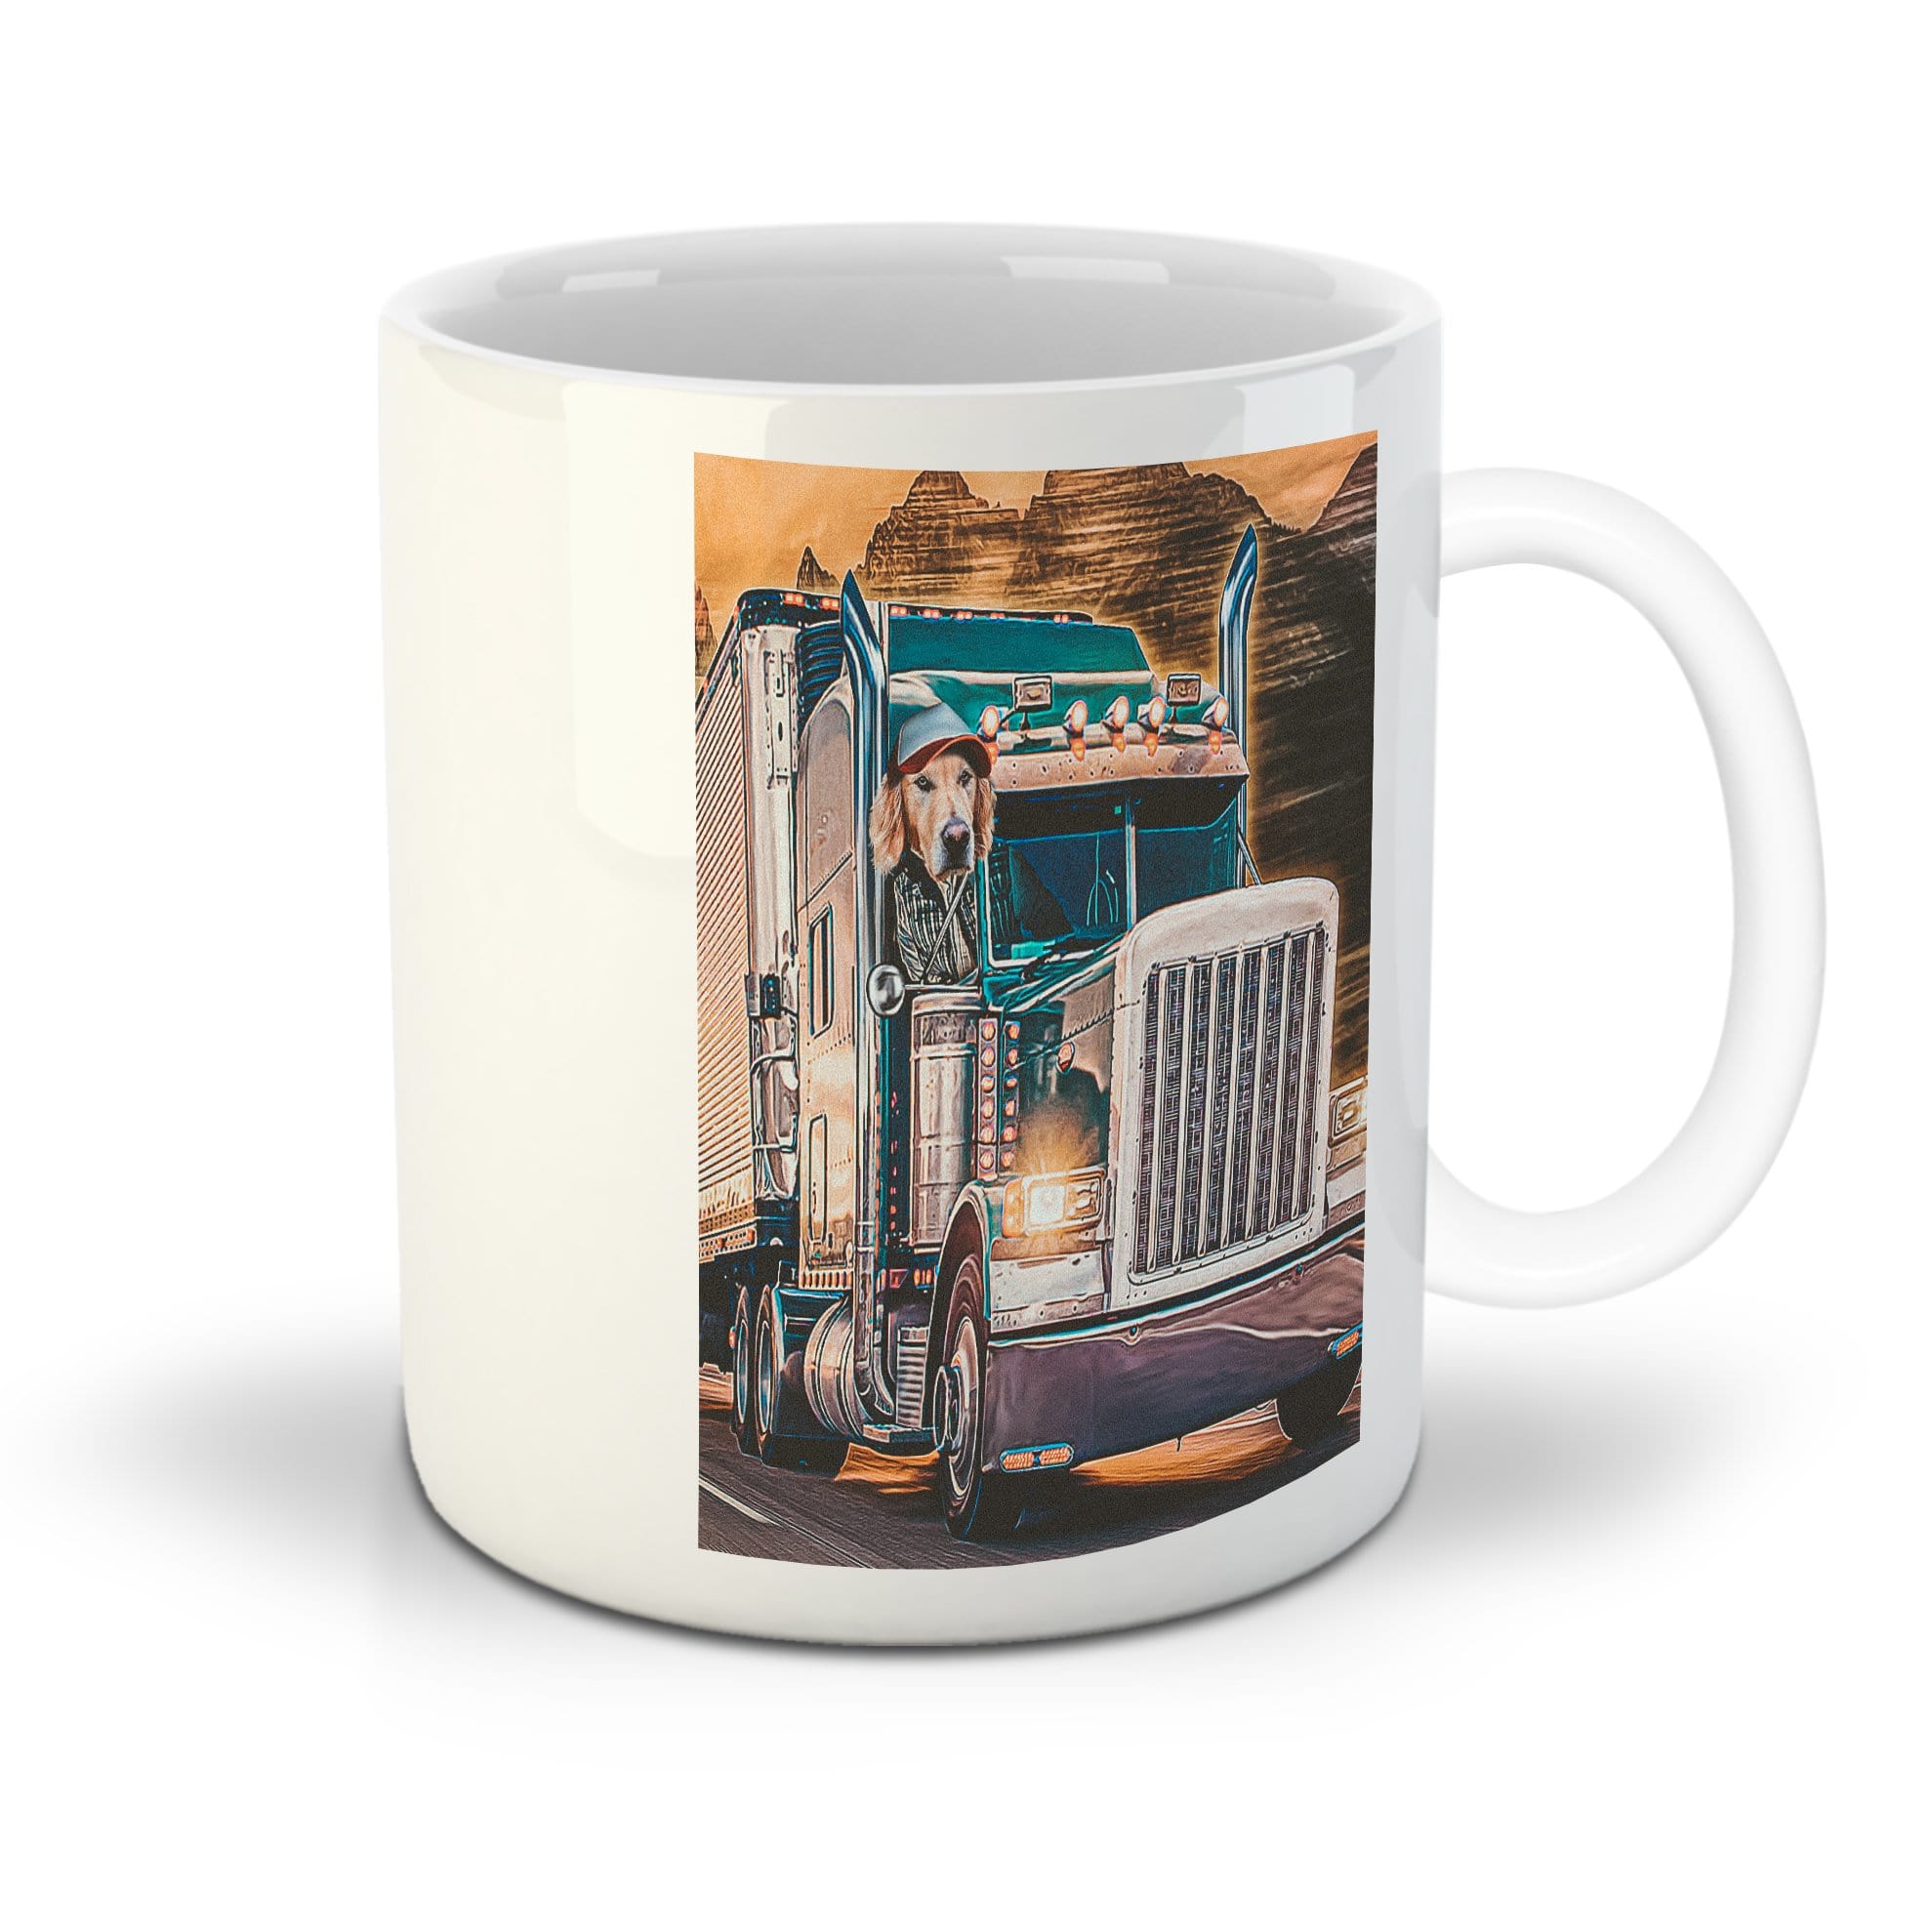 &#39;The Trucker&#39; Personalized Pet Mug